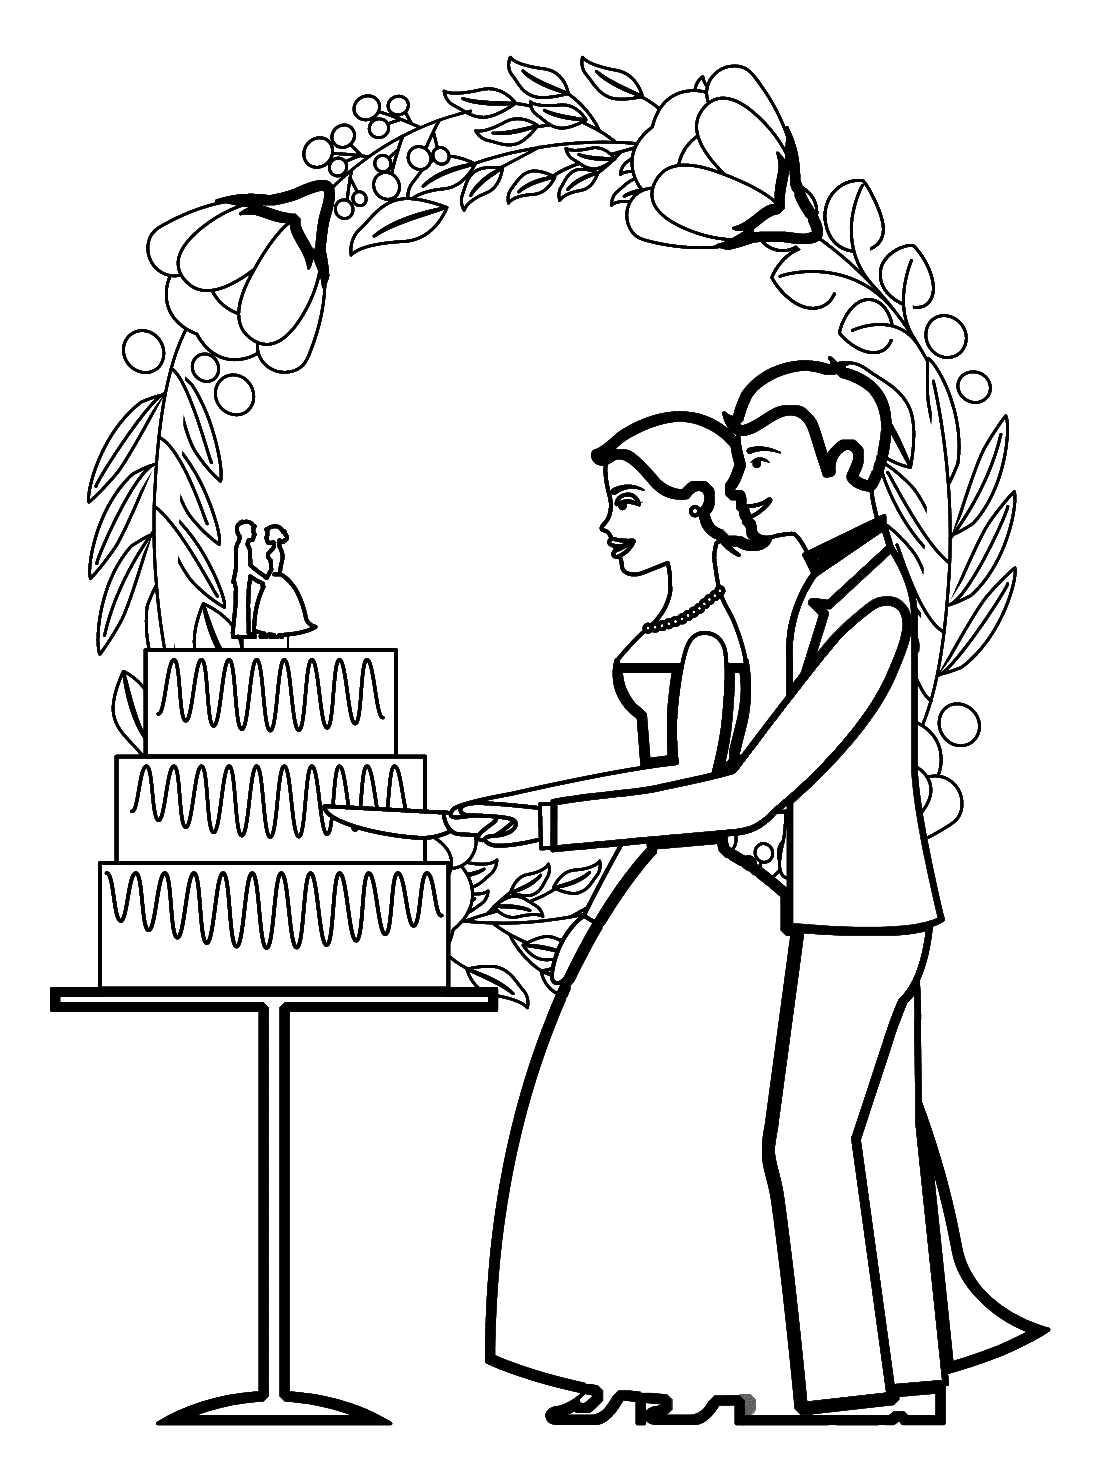 Bride And Groom Wedding Table